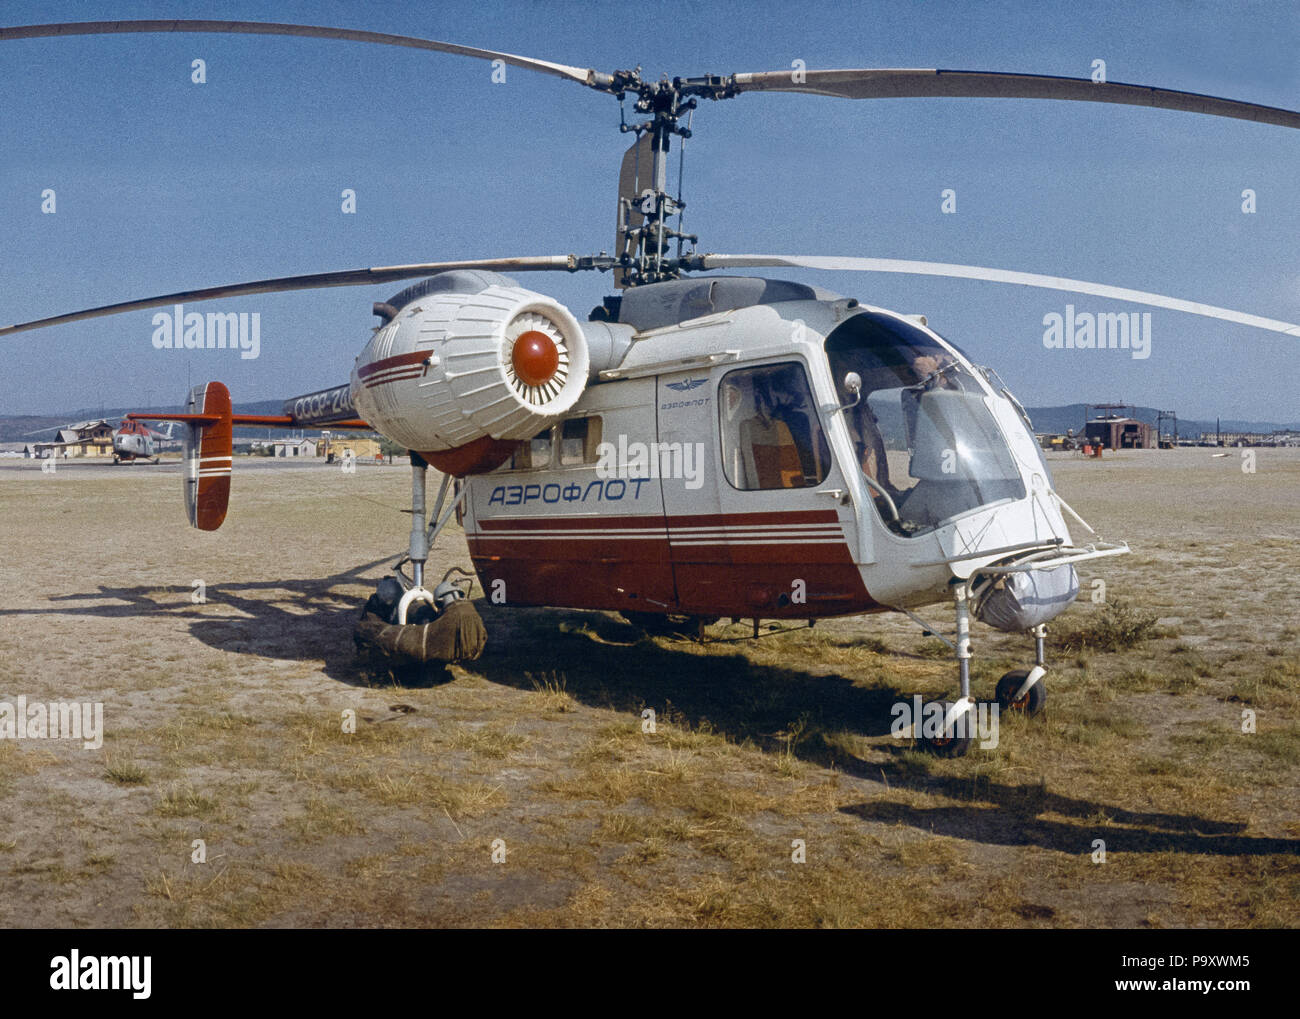 The Kamov Ka-26 helicopter of Aeroflot, USSR. Stock Photo